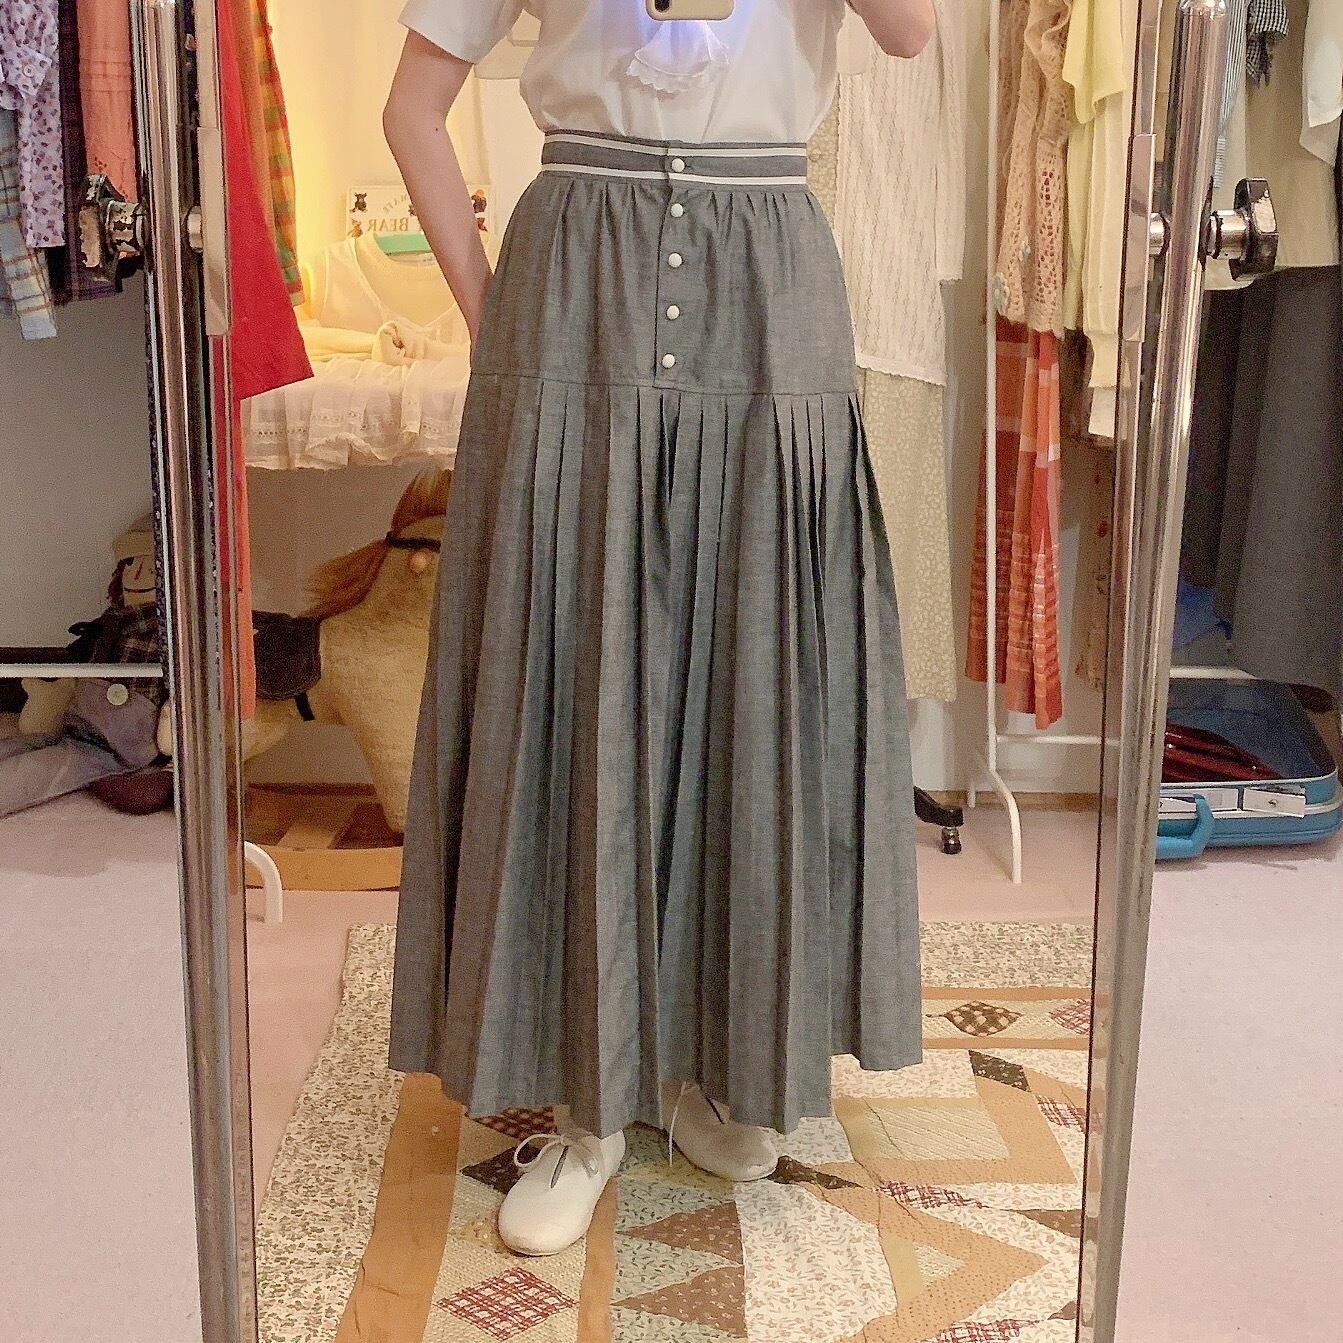 original / brand new pleats skirt / gray